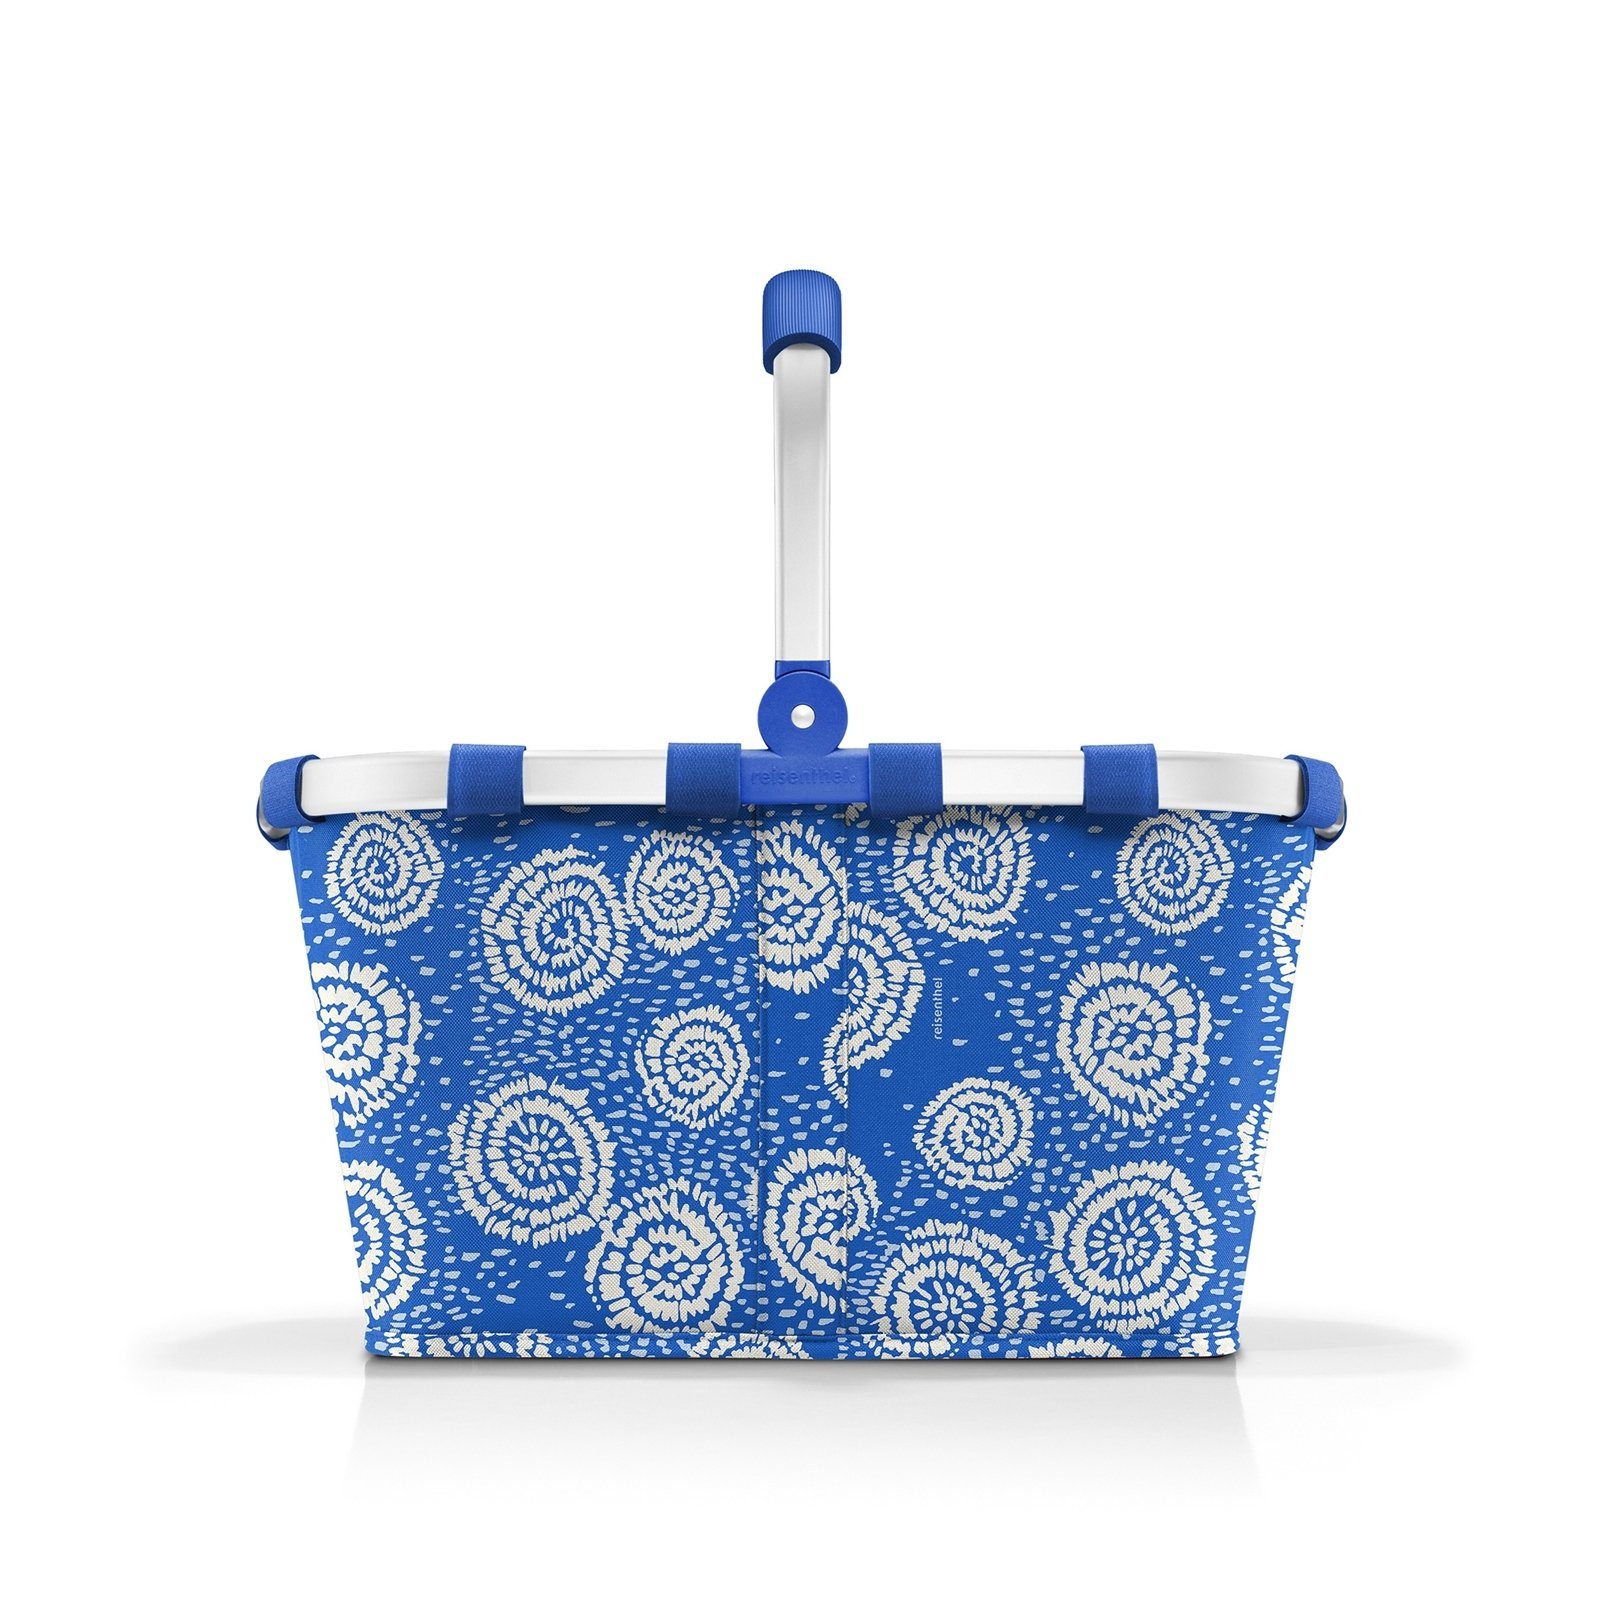 REISENTHEL® Einkaufskorb Carrybag, Einkaufskorb Shopping, 22 l batik strong blue